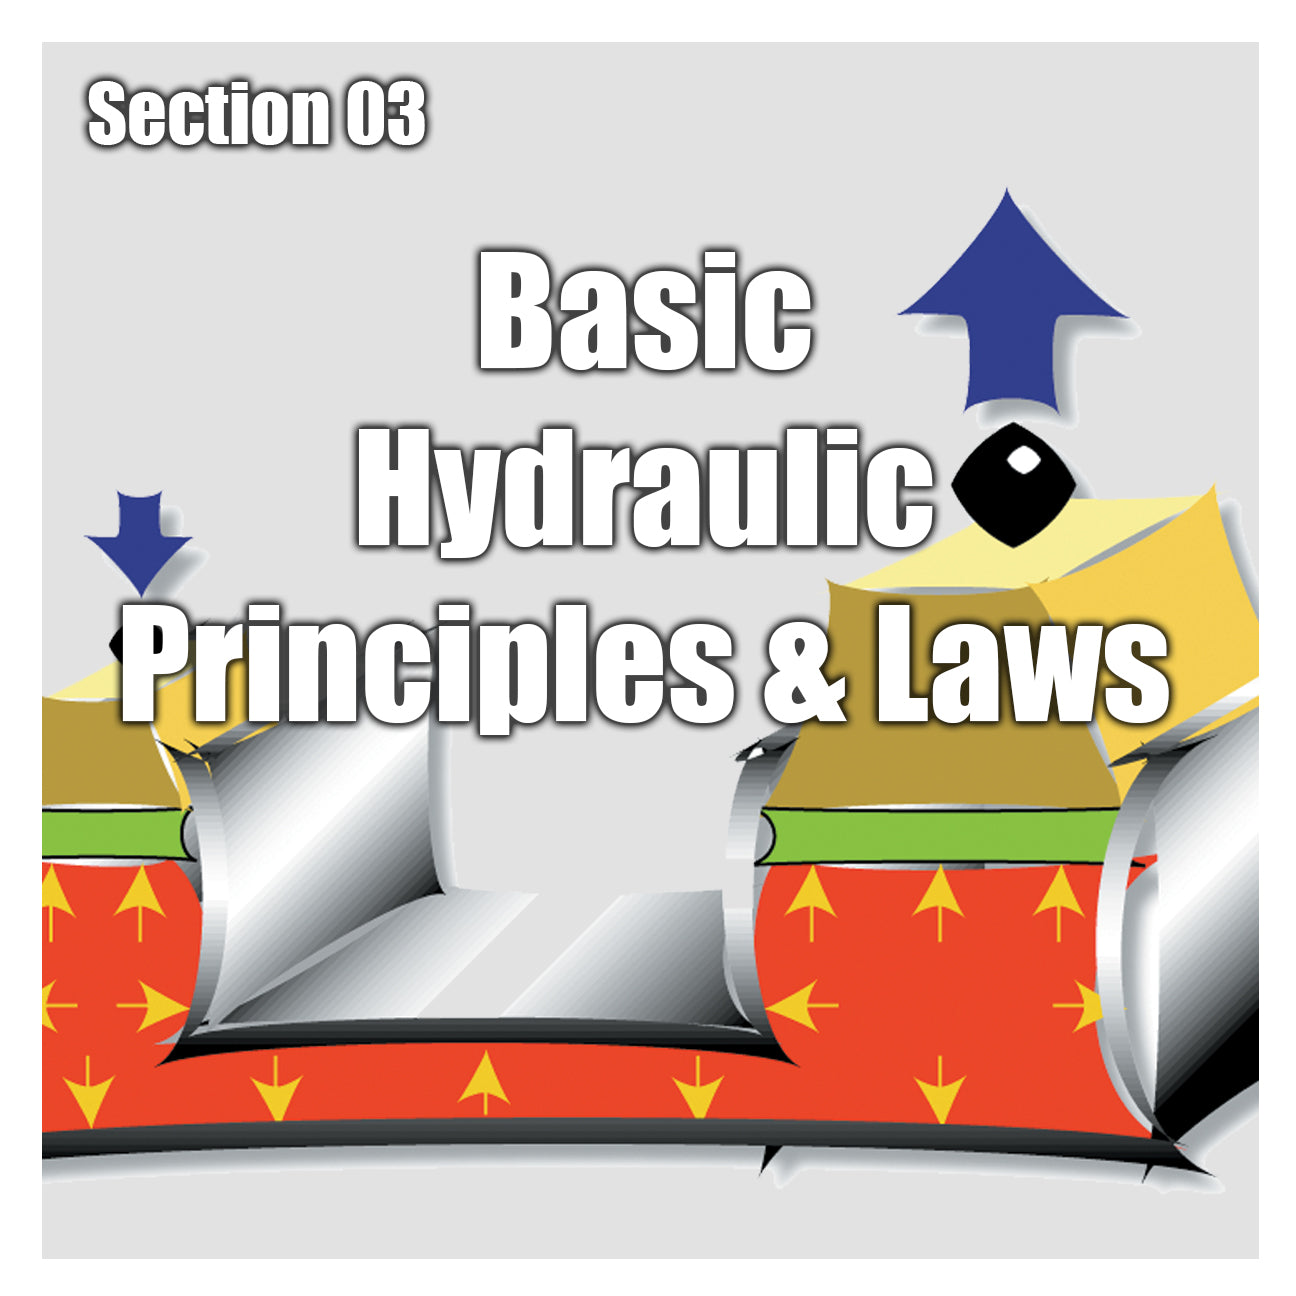 Basic Hydraulics Principles & Laws